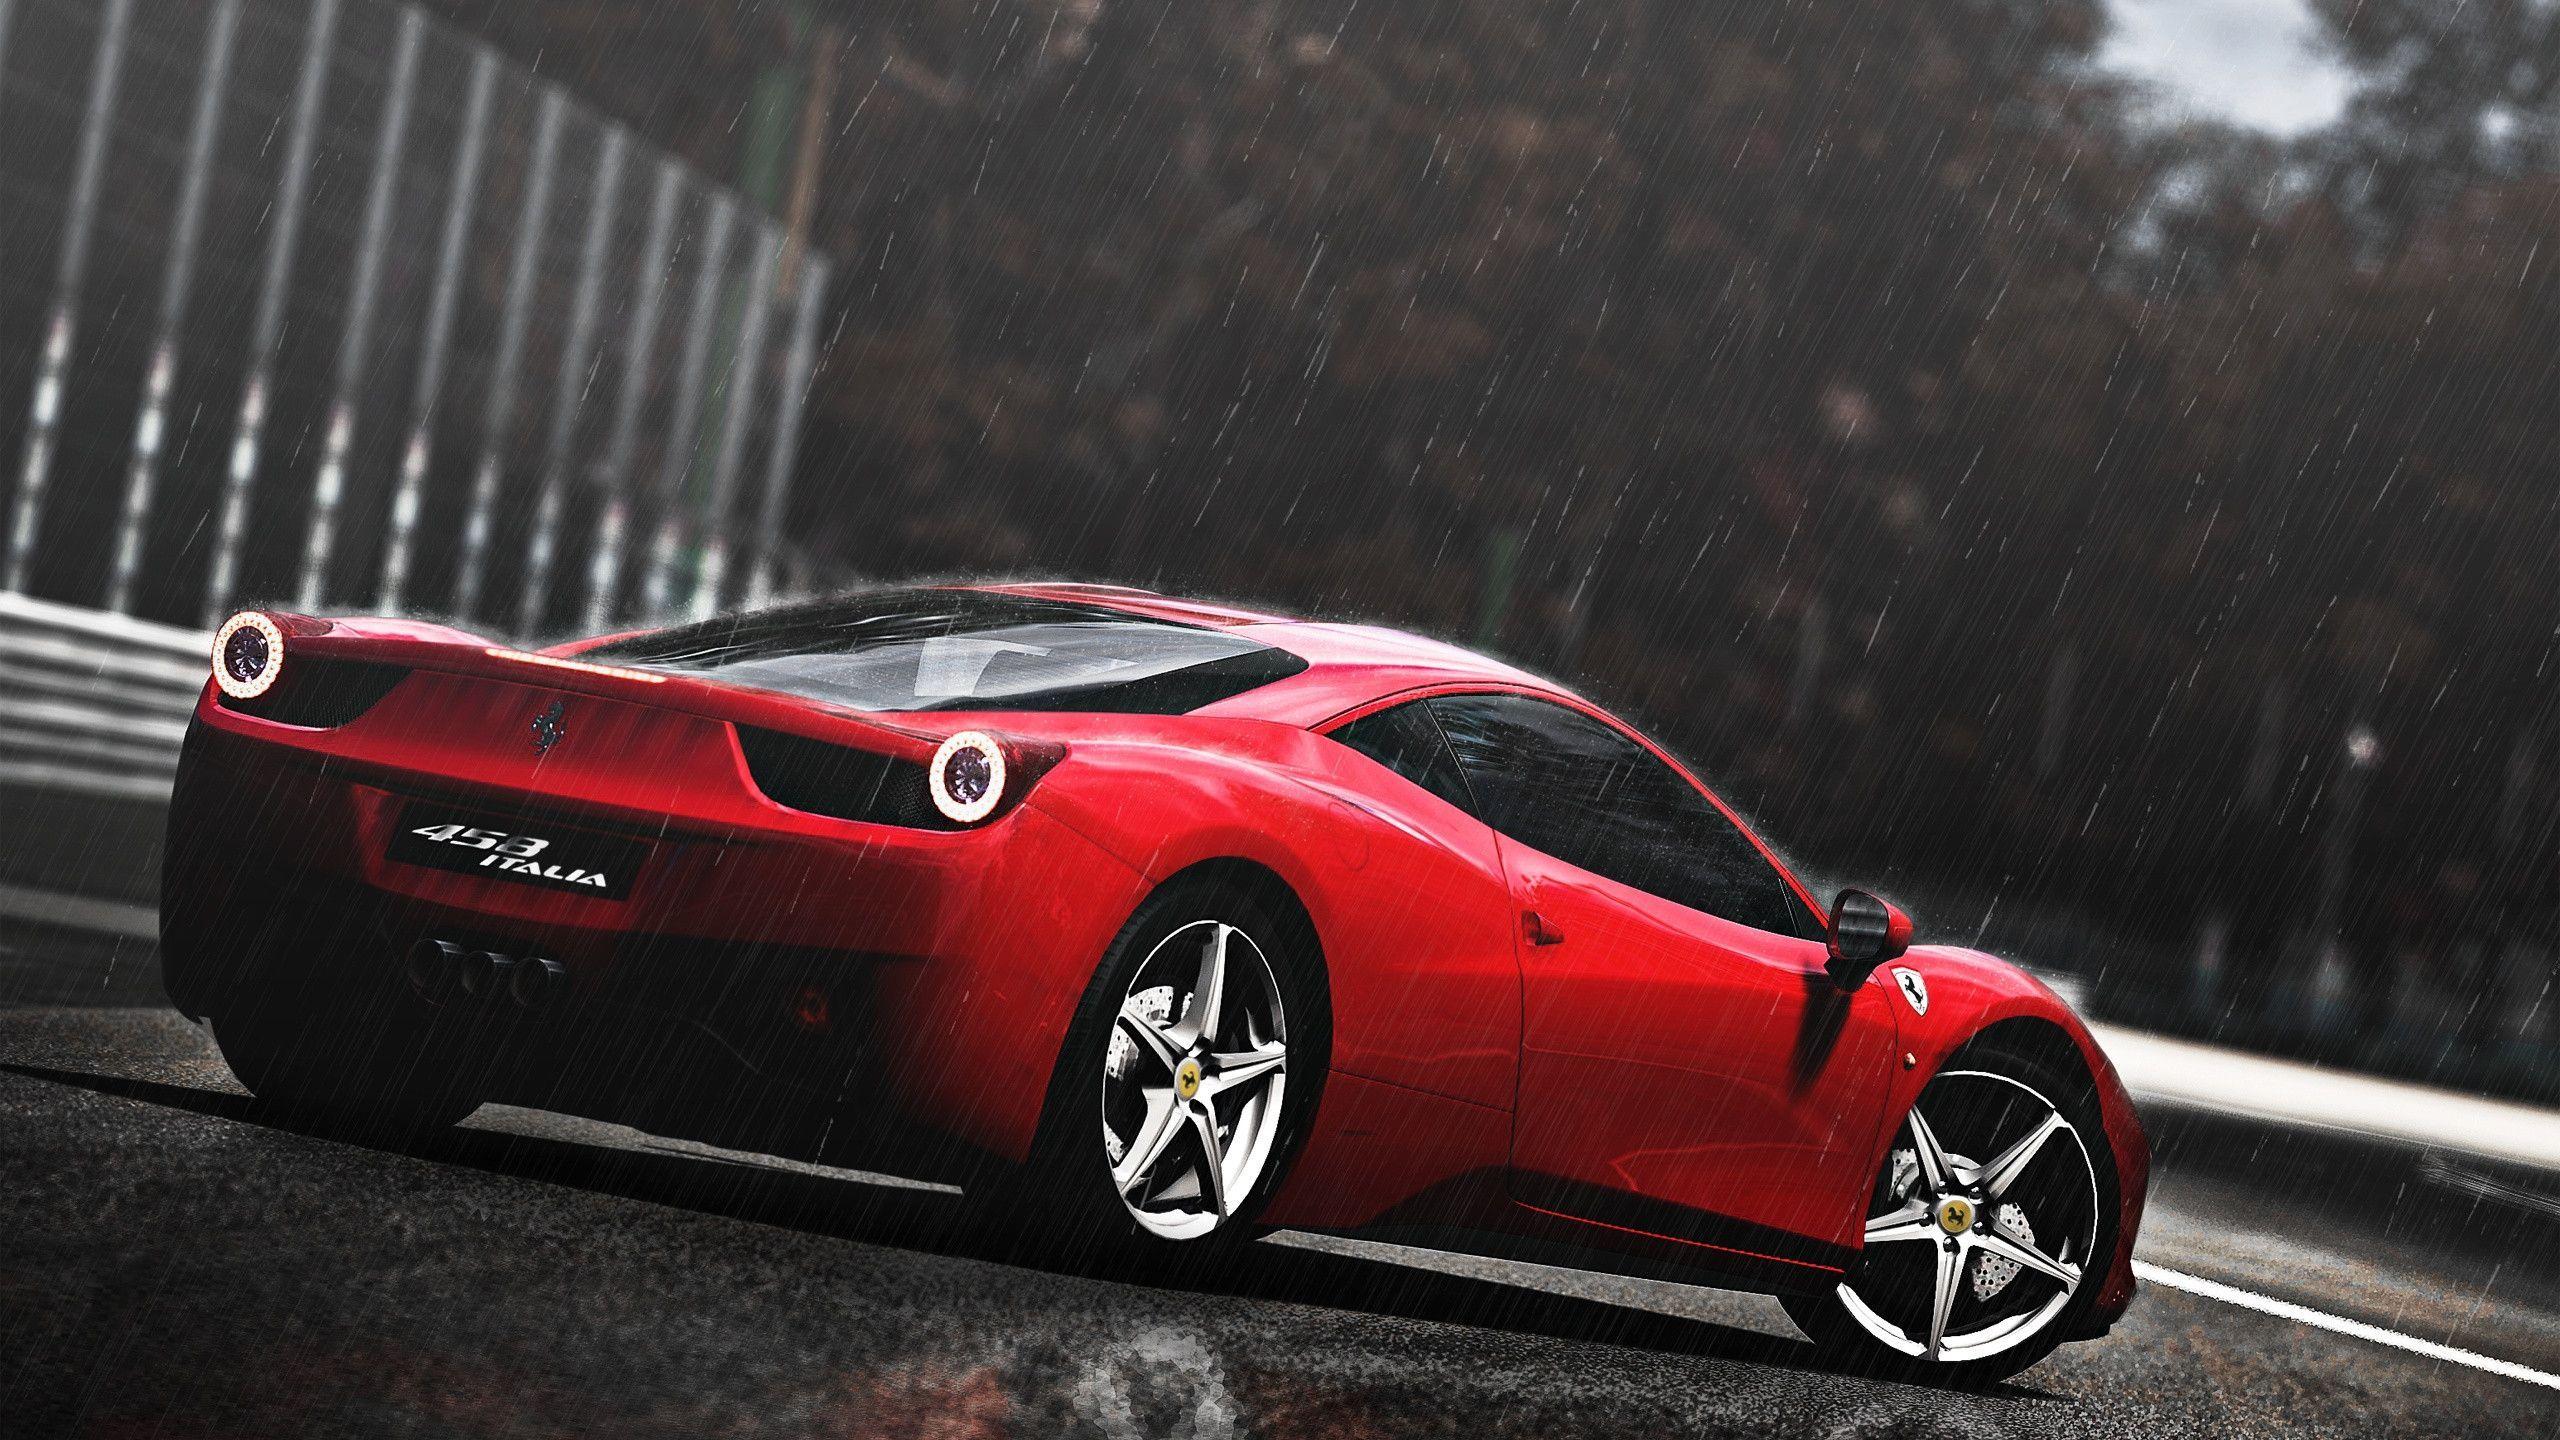 Ferrari 458 Italia wallpaper